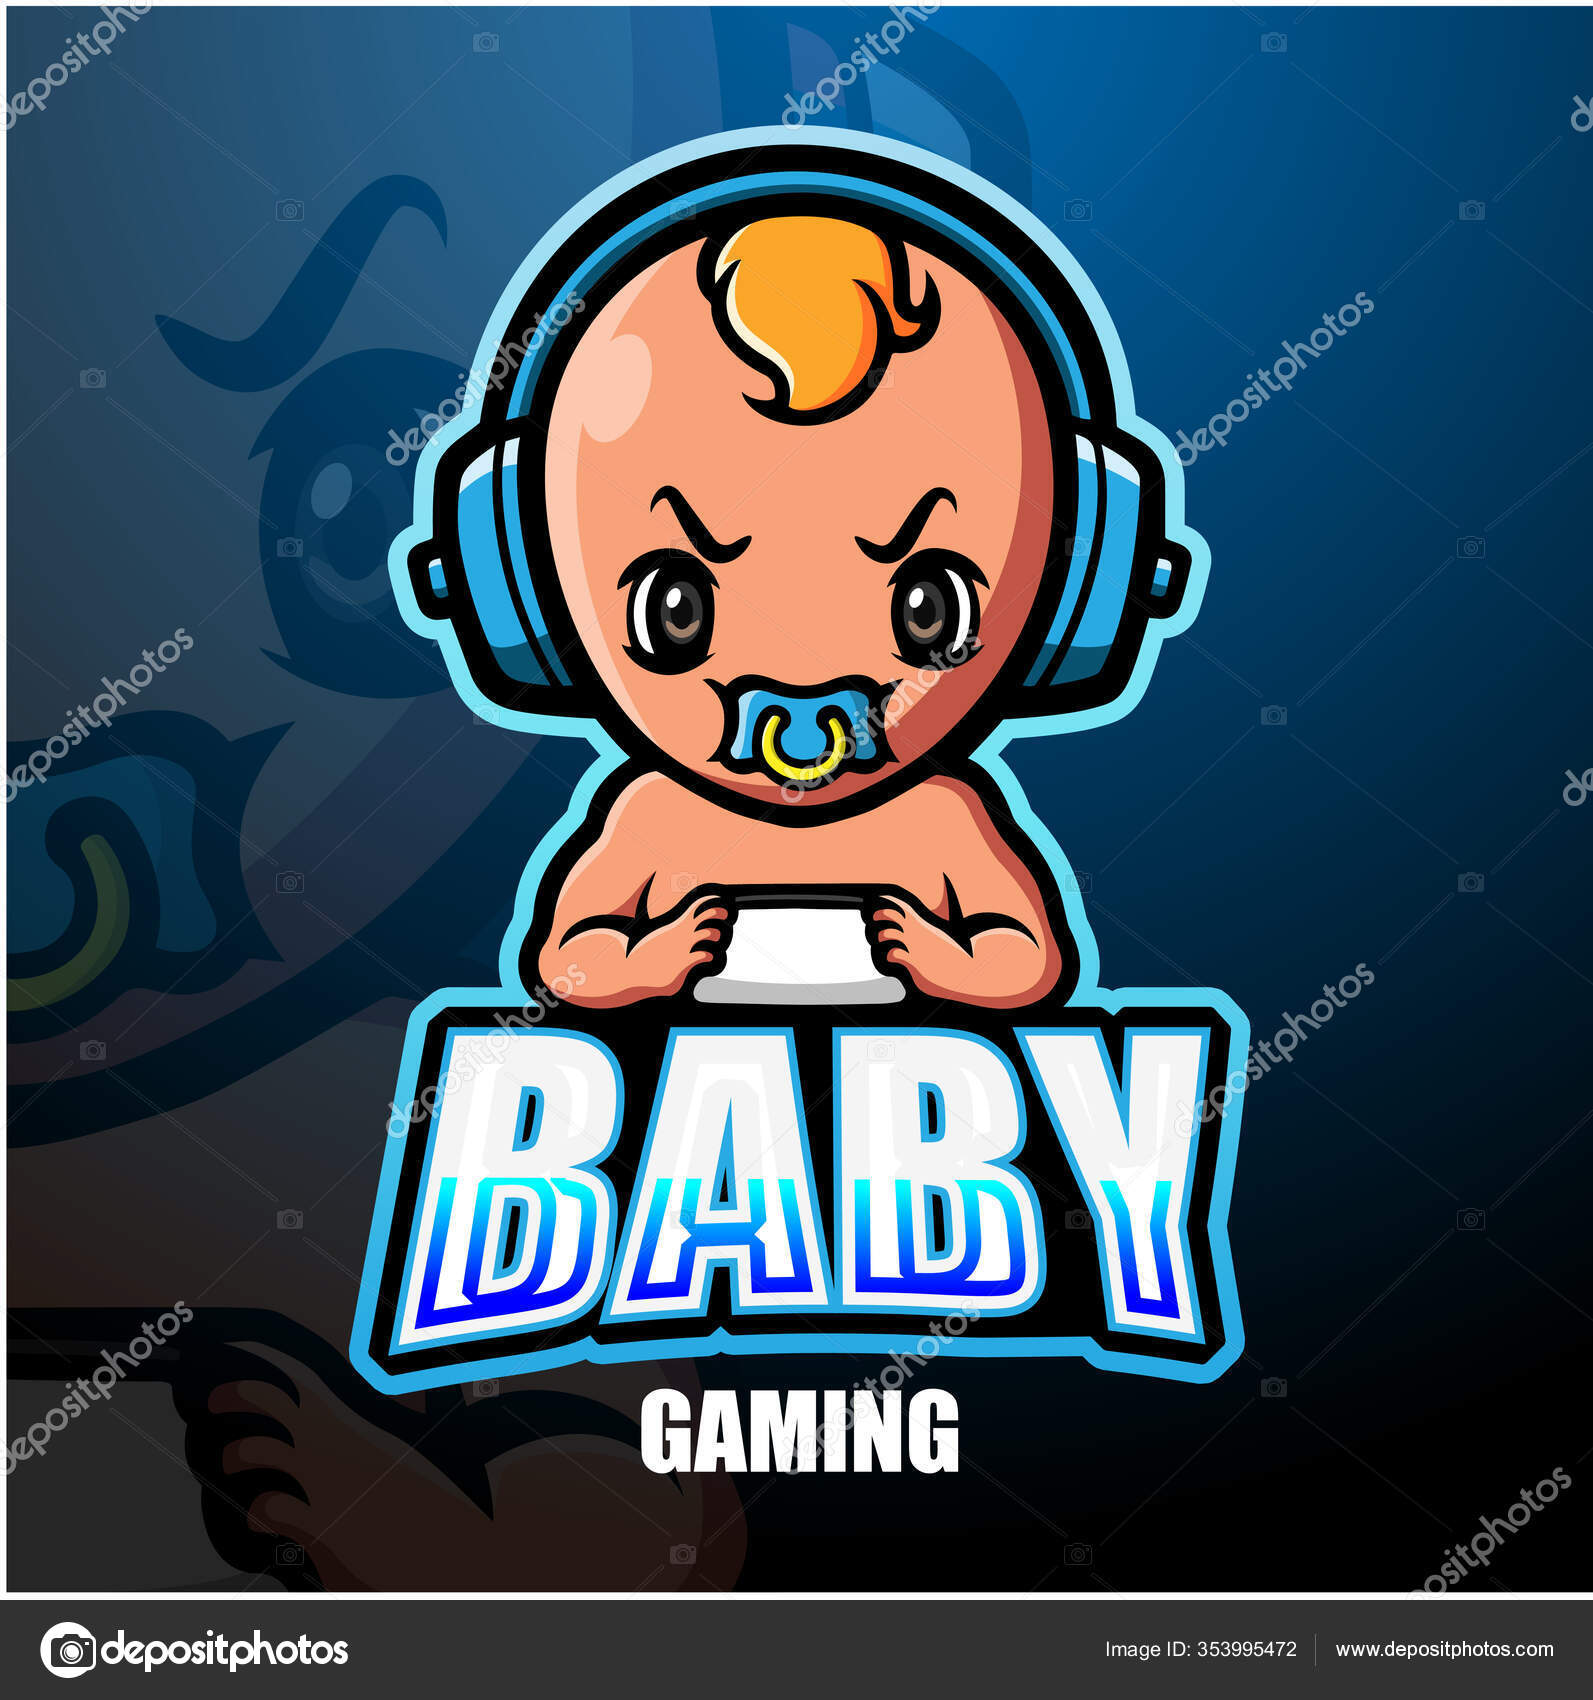 Gamer boy mascot esport logo design. Illustration of Gamer boy mascot  esport logo design royalty free illustration